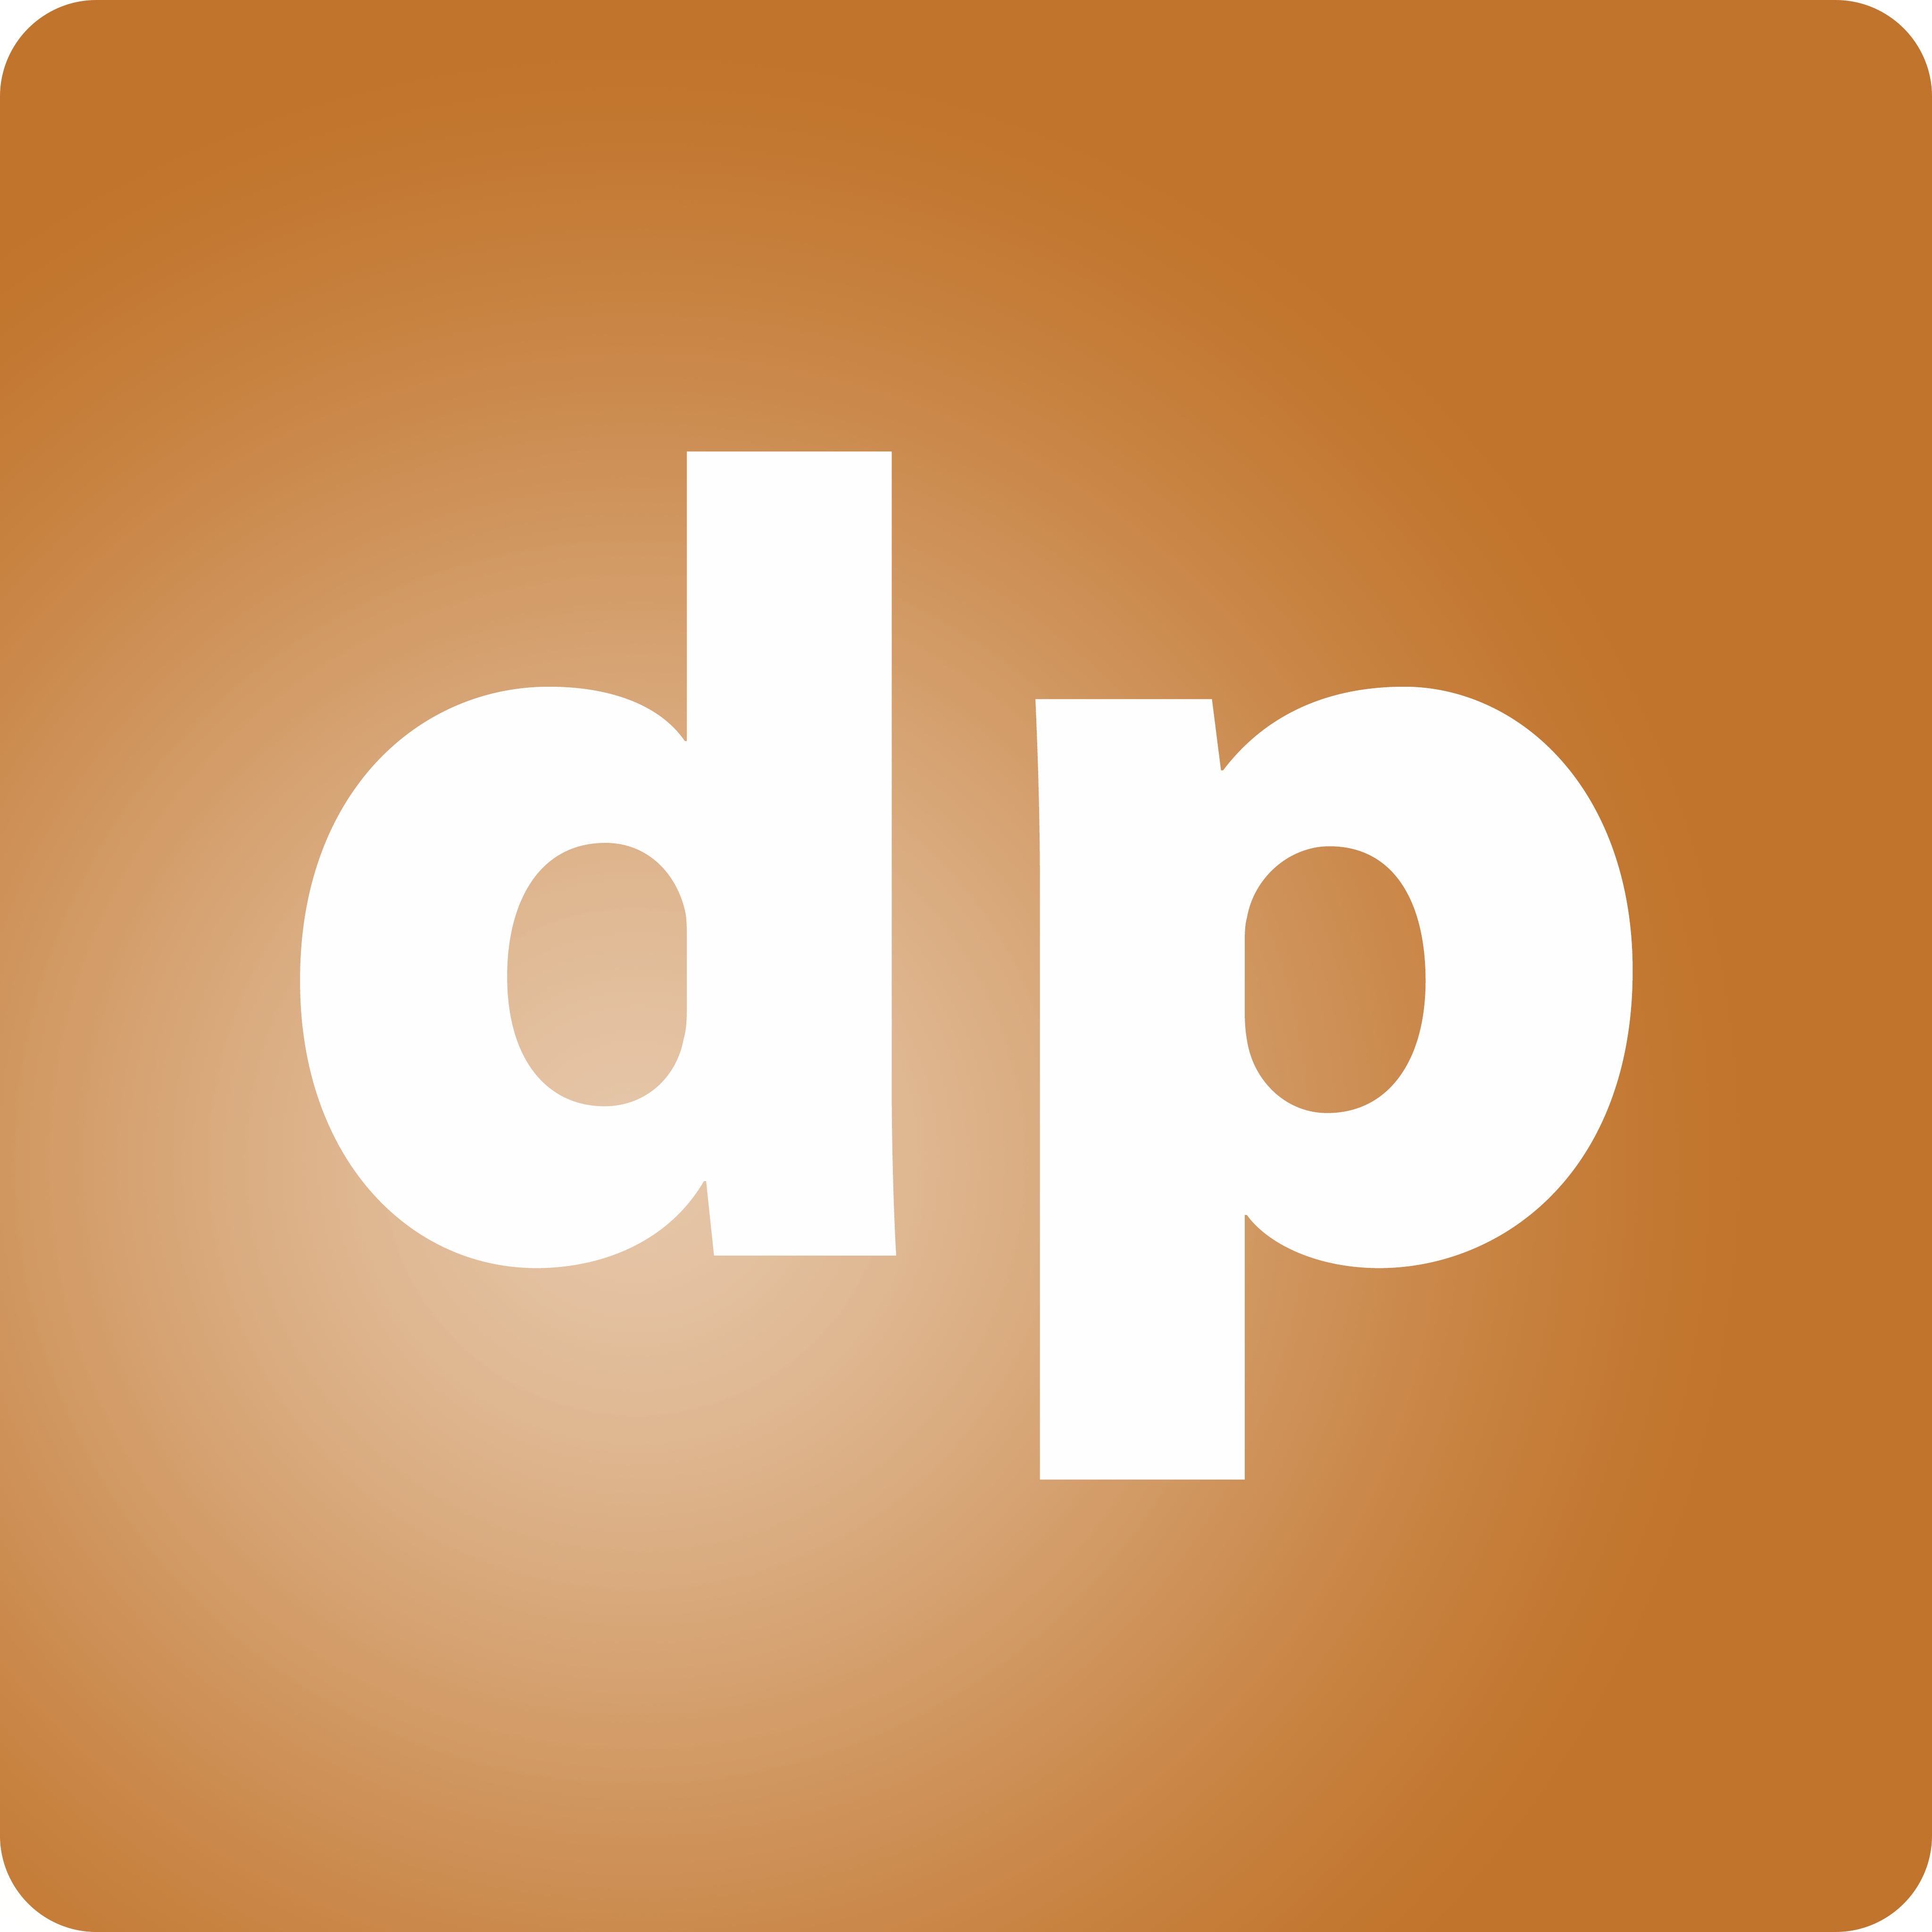 DataPoint Logo